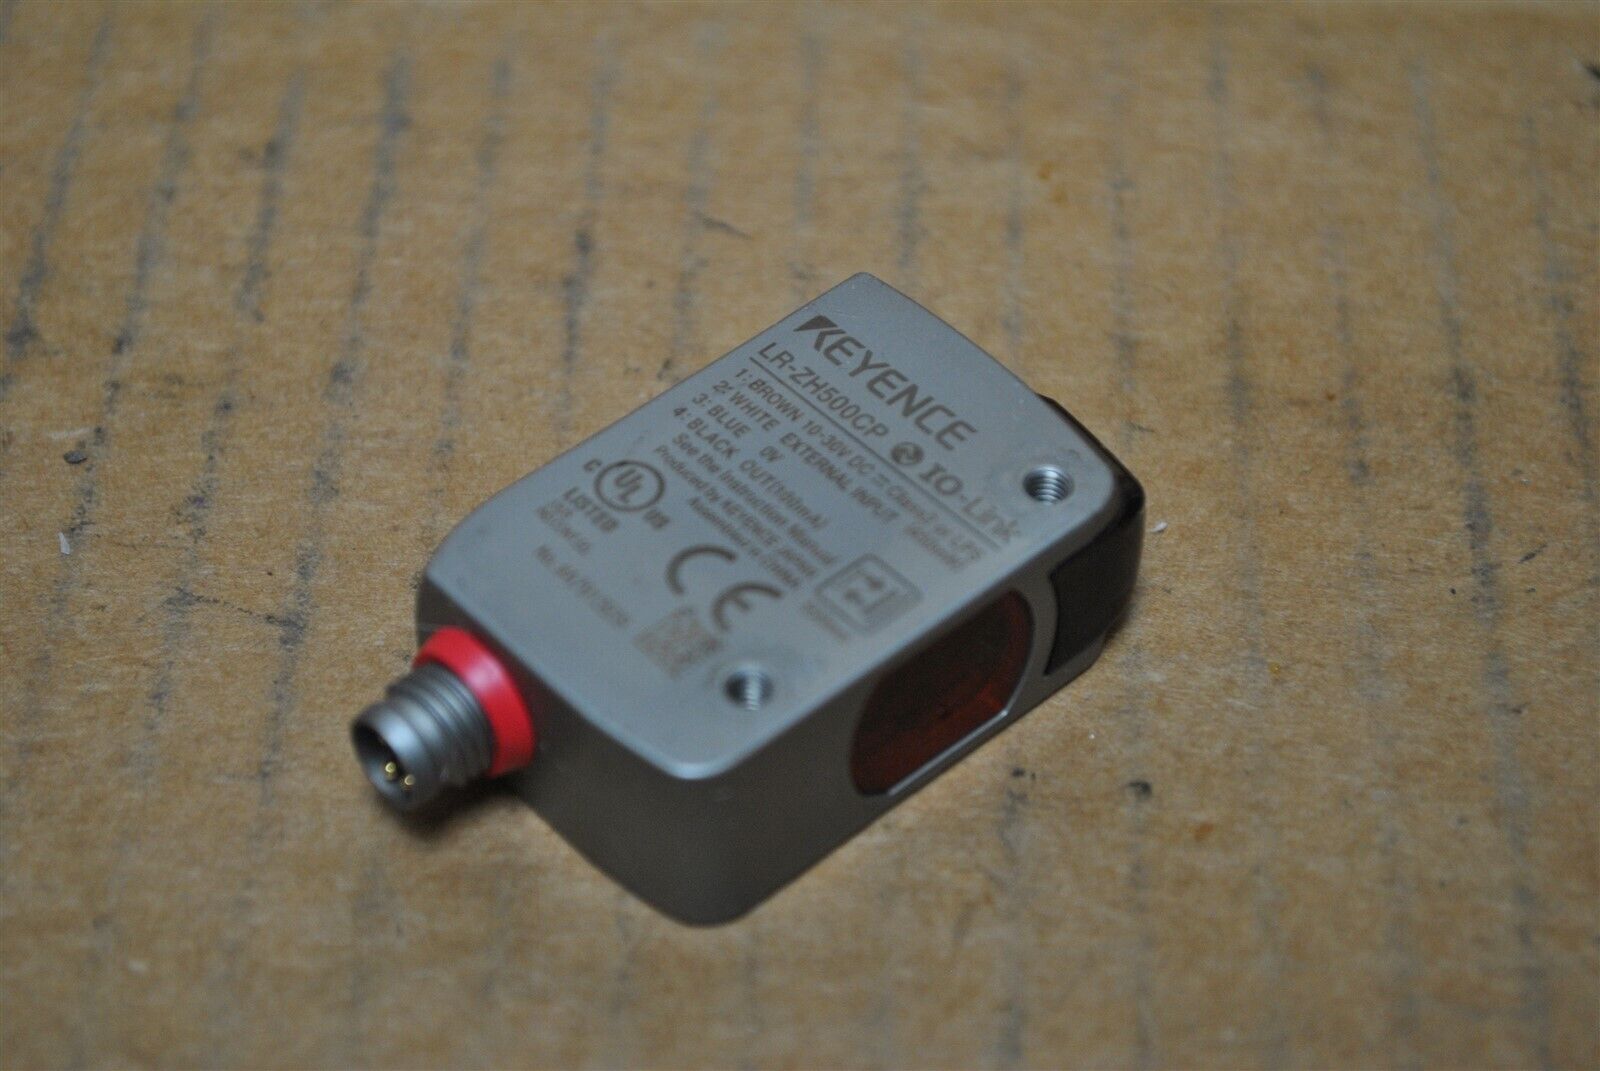 Keyence IO-Link Laser Sensor Part No. LR-ZH500CP